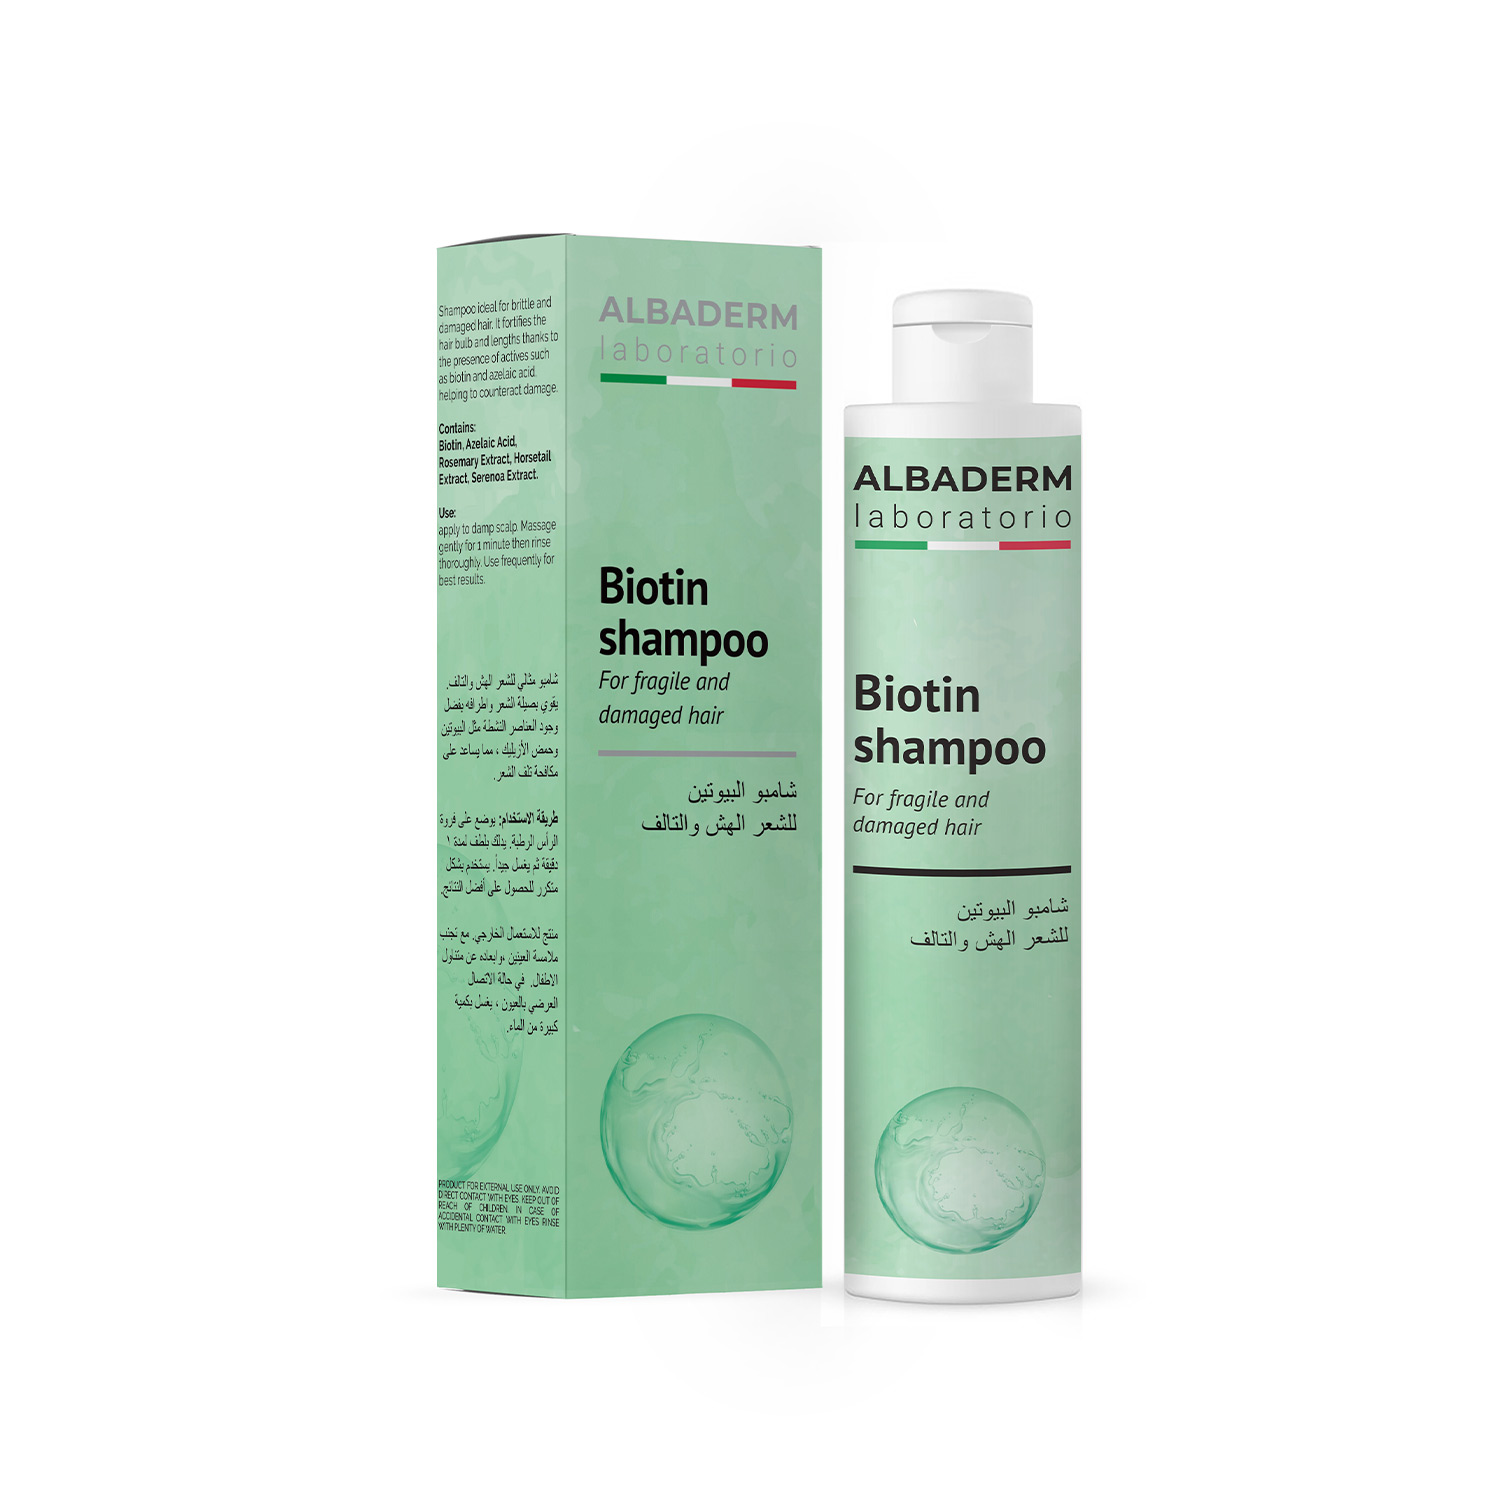 Biotin shampoo For fragile and damaged hair